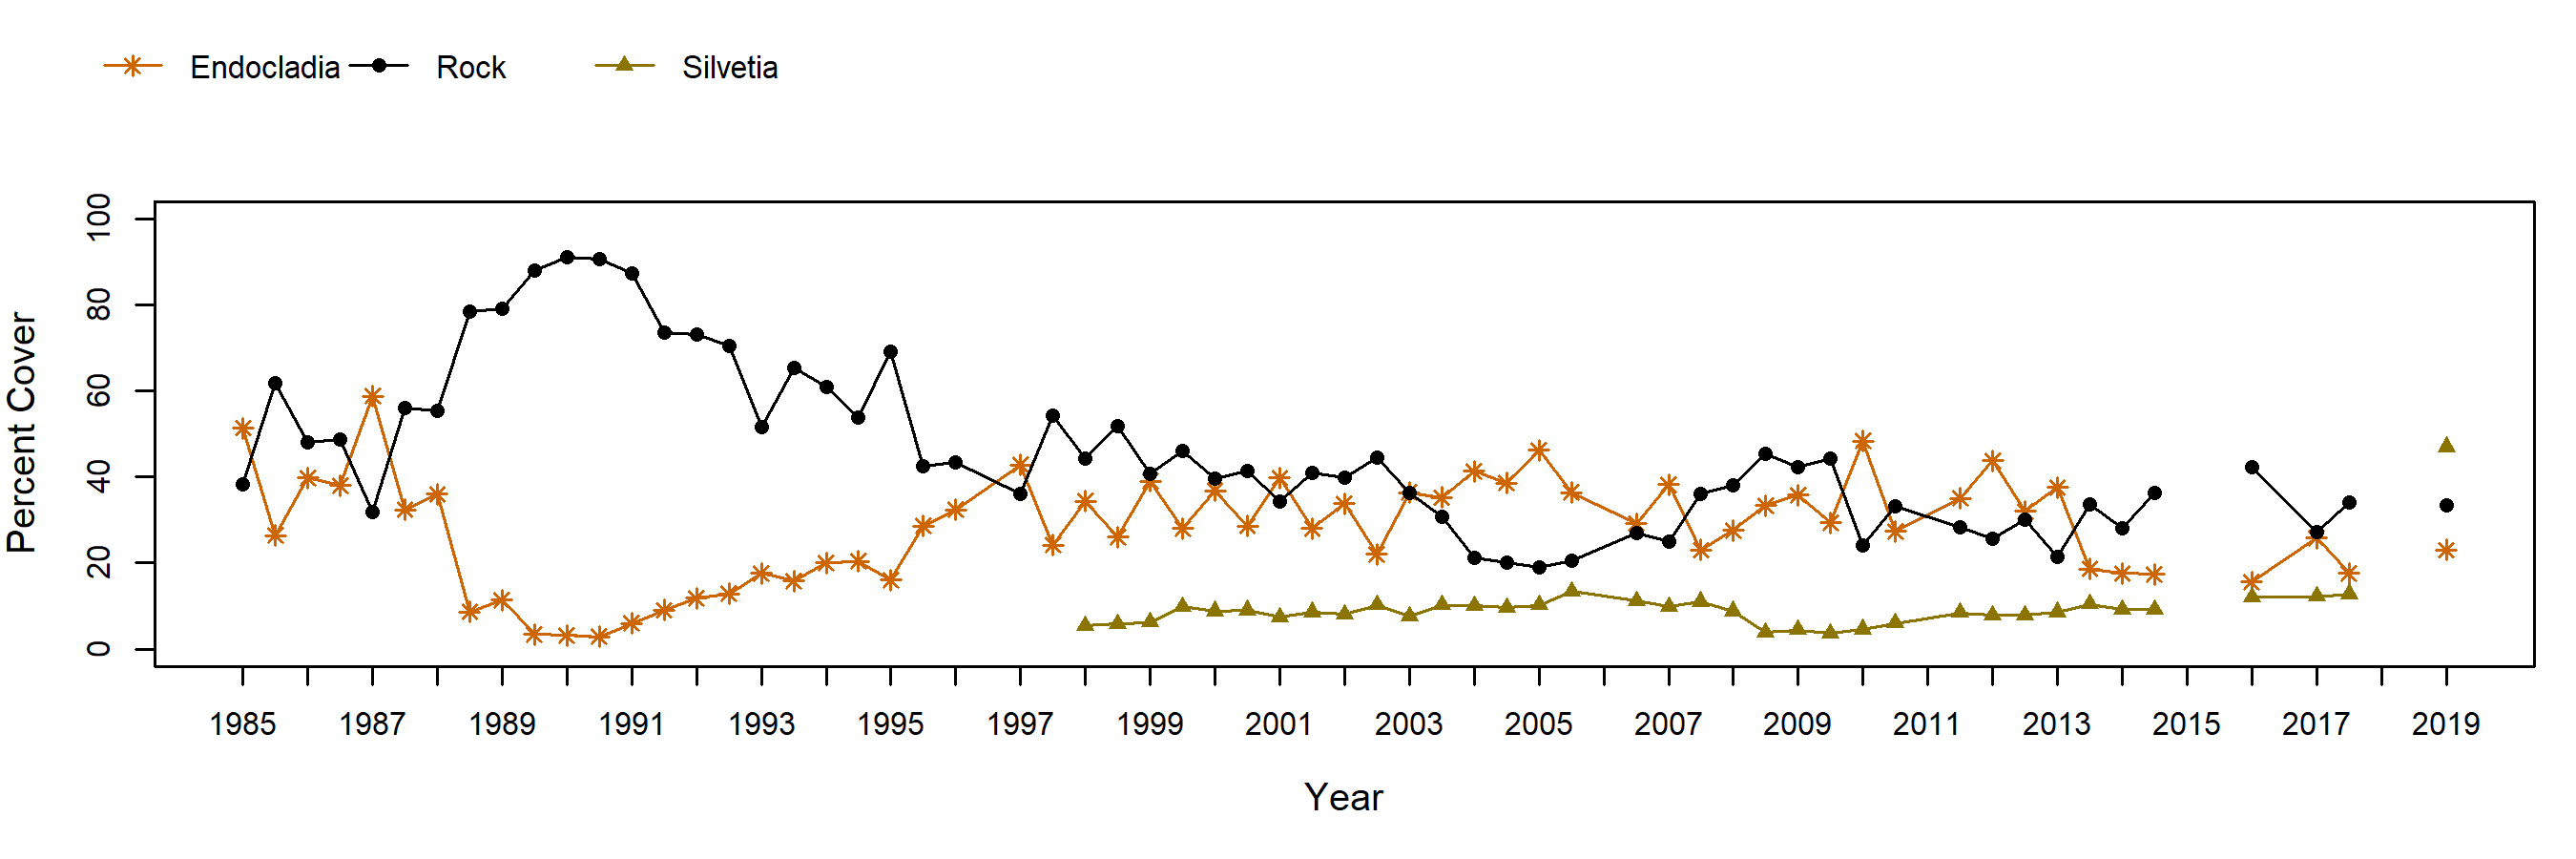 Cuyler Harbor Endocladia trend plot